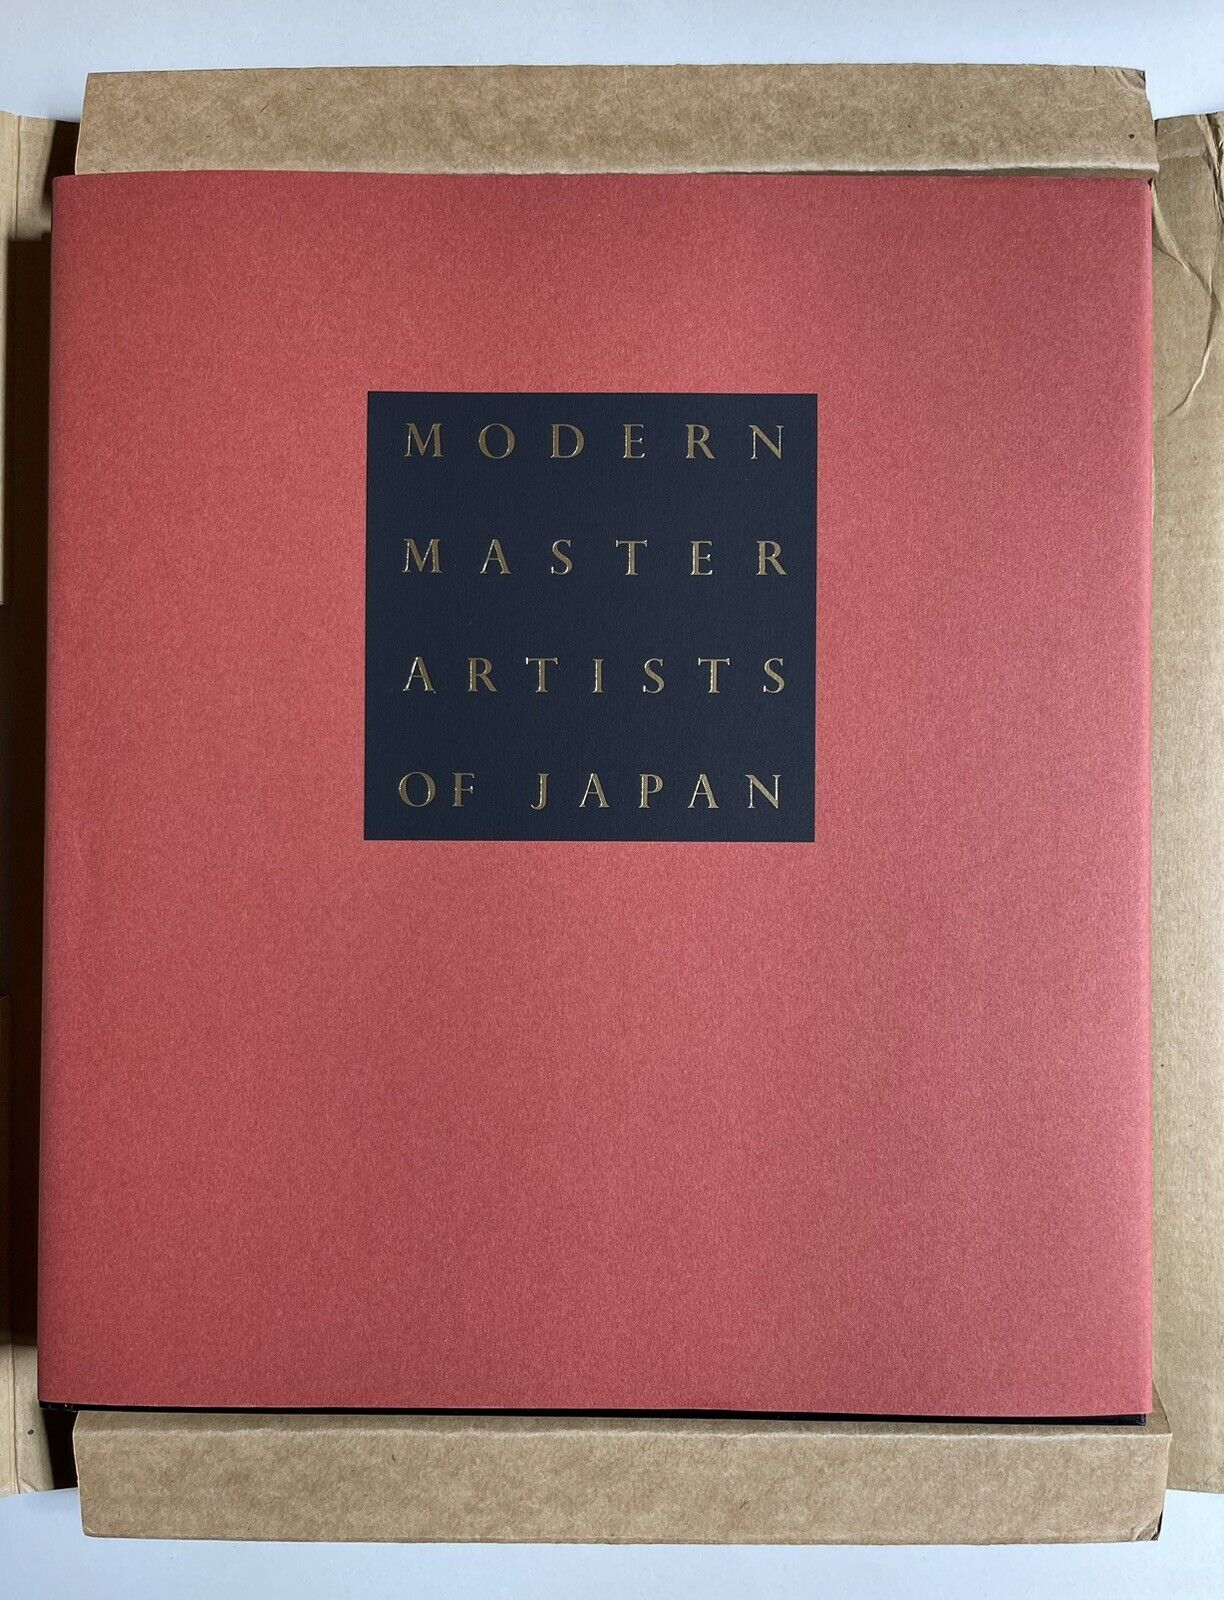 Modern Master Artists Japan, Modern Artists Japan, Art Modern Japan, Japan